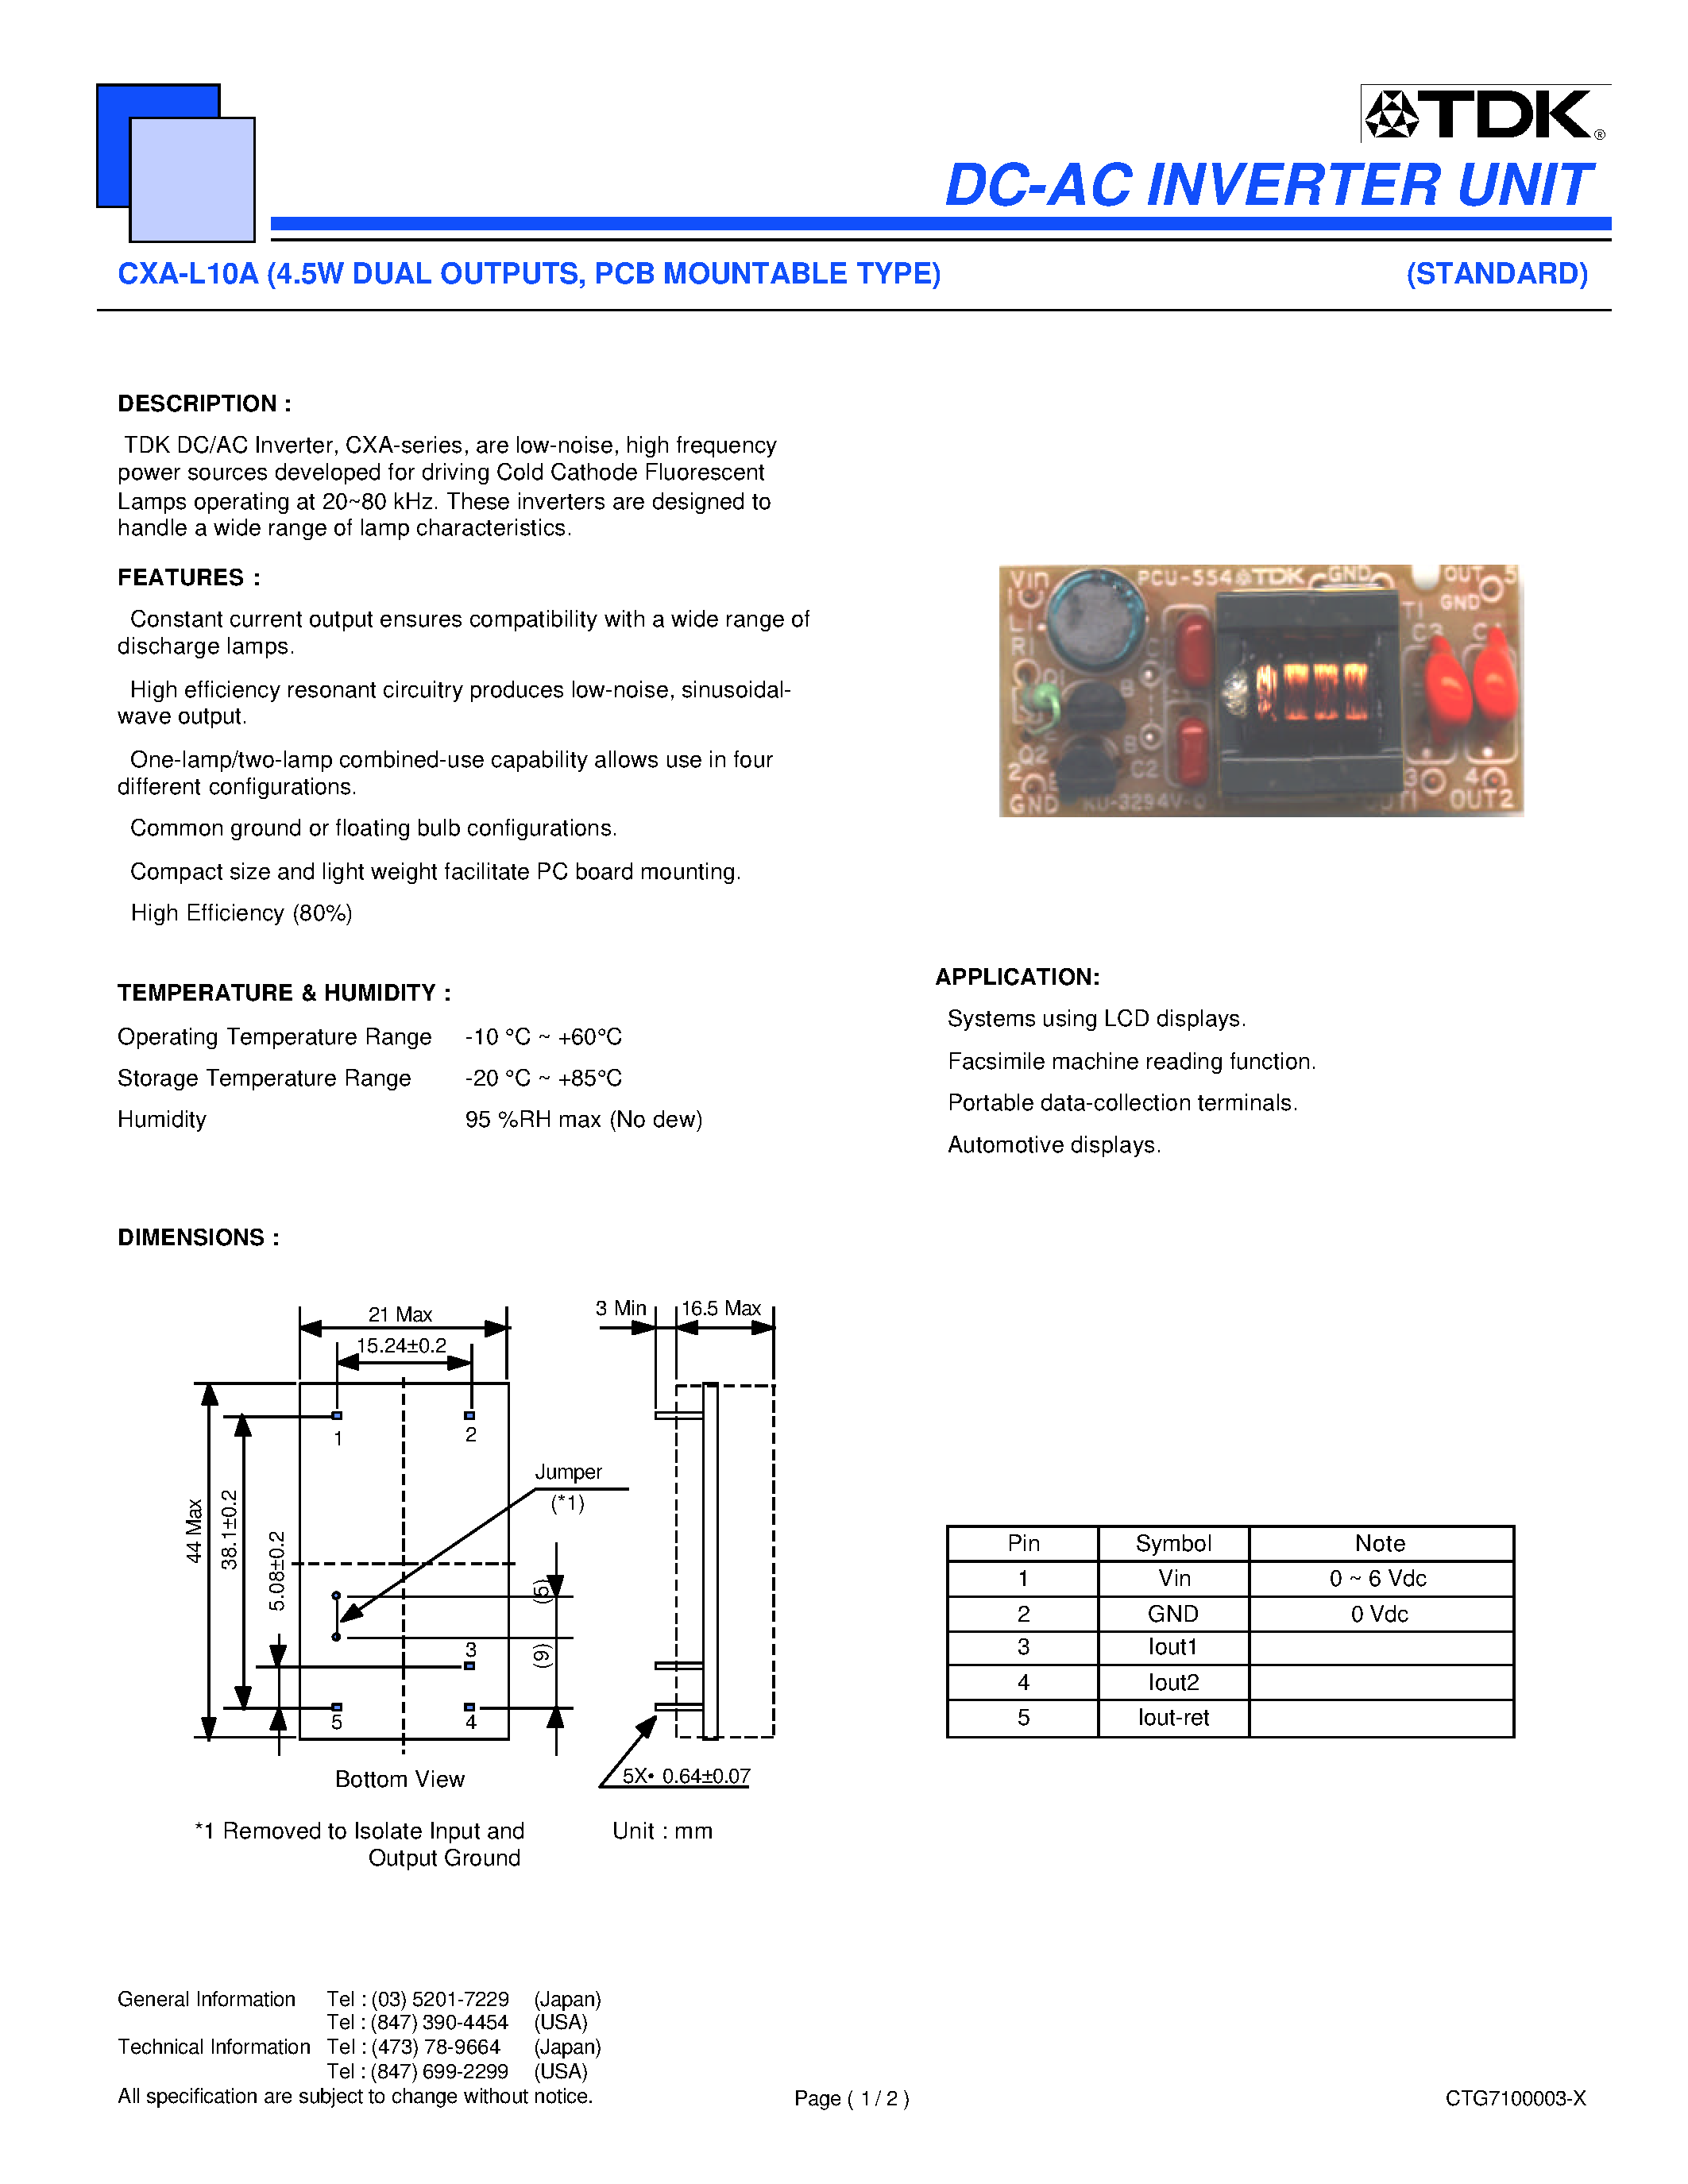 Datasheet CXA-L10A - DC-AC INVERTER UNIT (4.5W DUAL OUTPUTS/ PCB MOUNTABLE TYPE) page 1